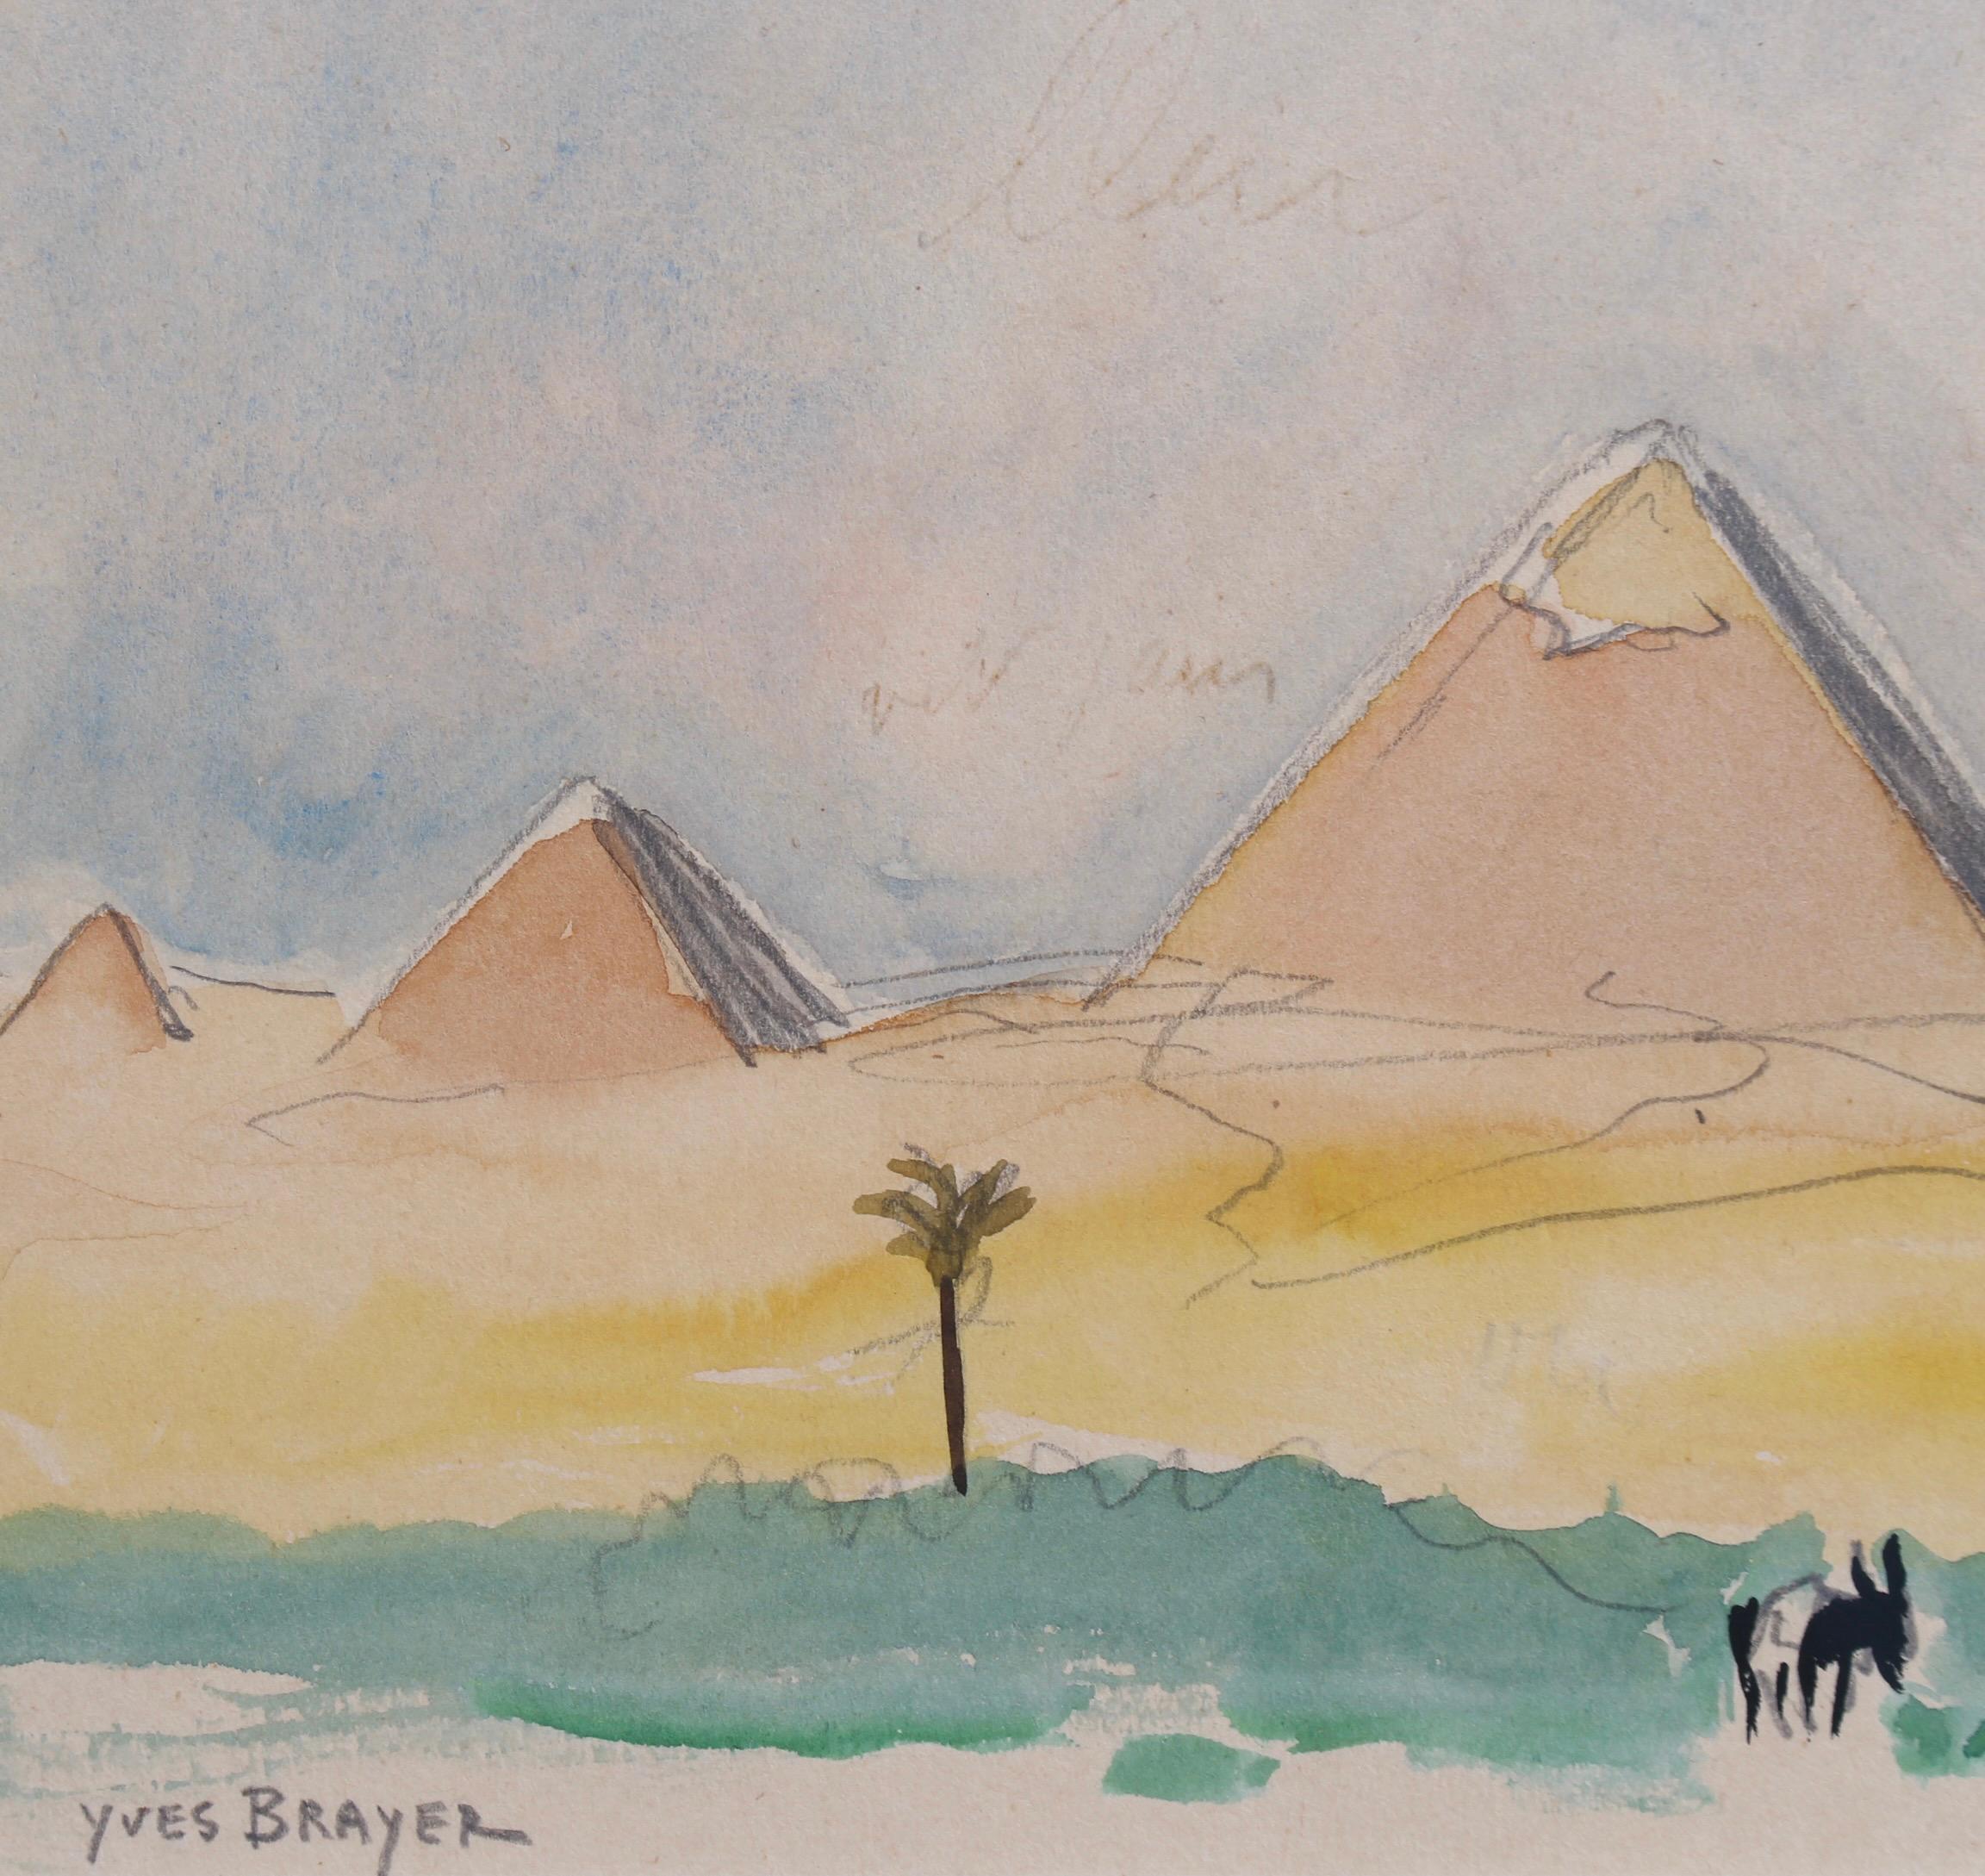 The Pyramids of Giza 4